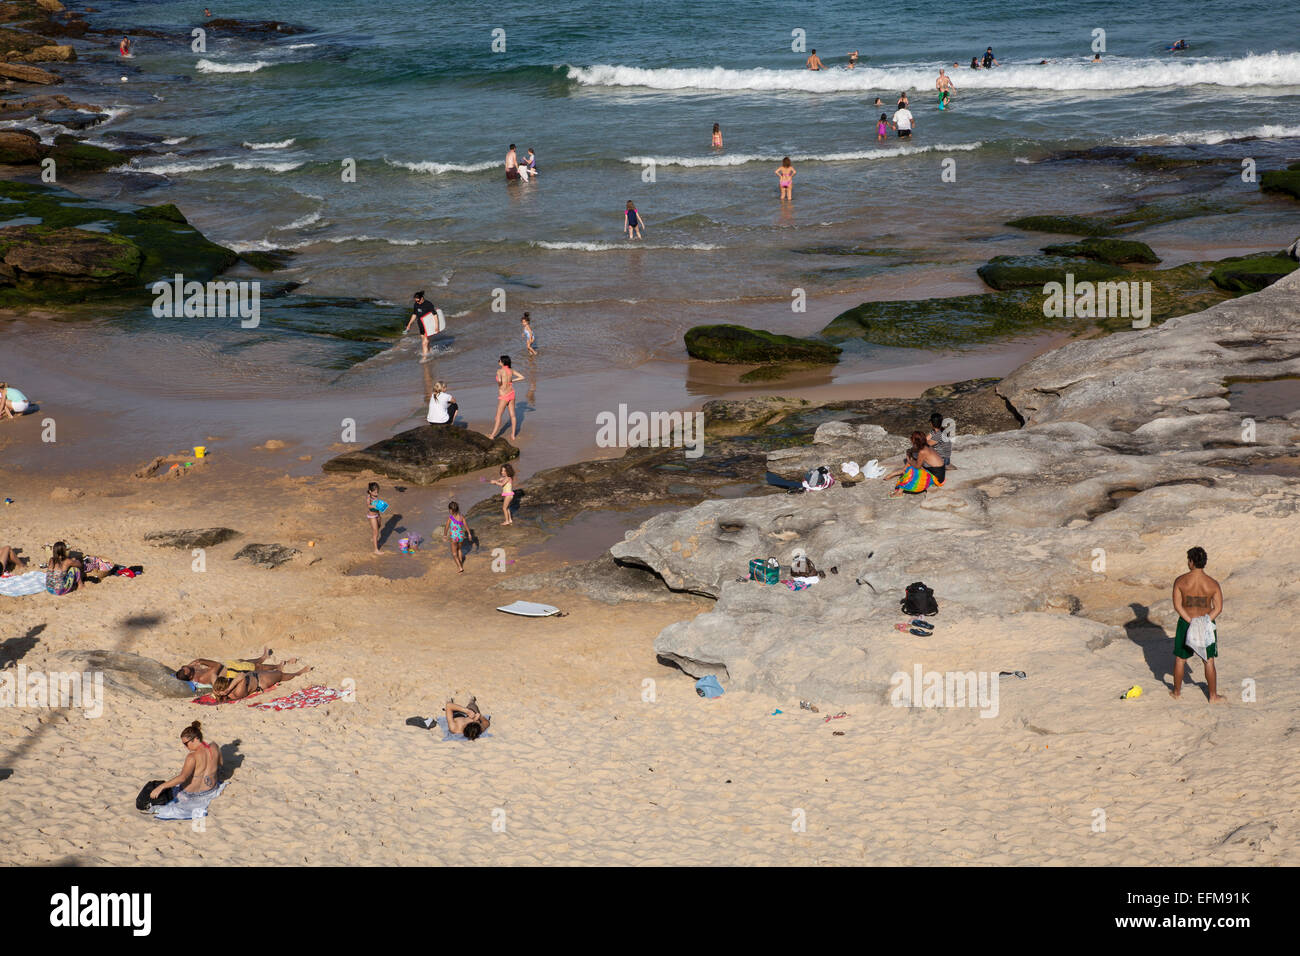 Maroubra beach, Sydney, New South Wales, Australia Stock Photo